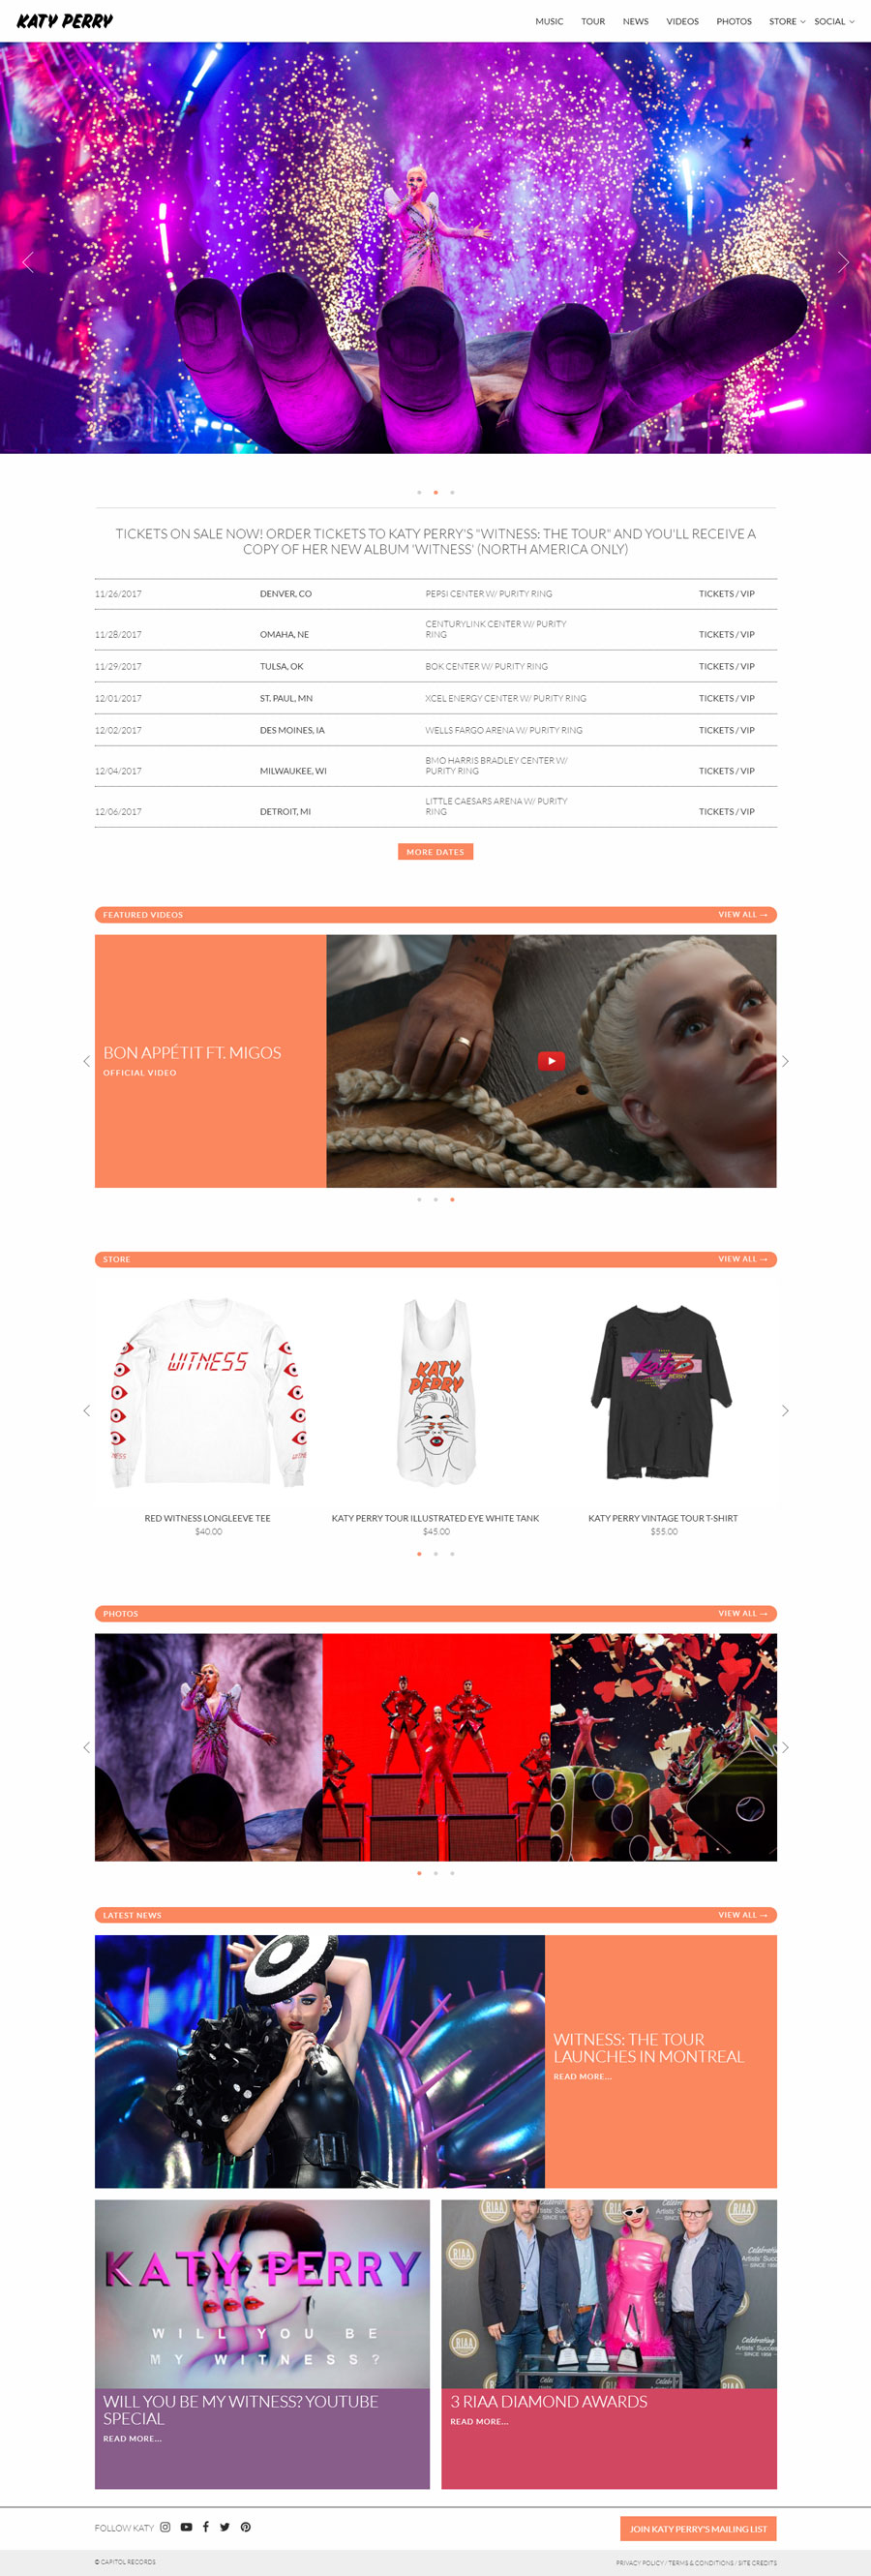 Katy Perry American Singer Website Design